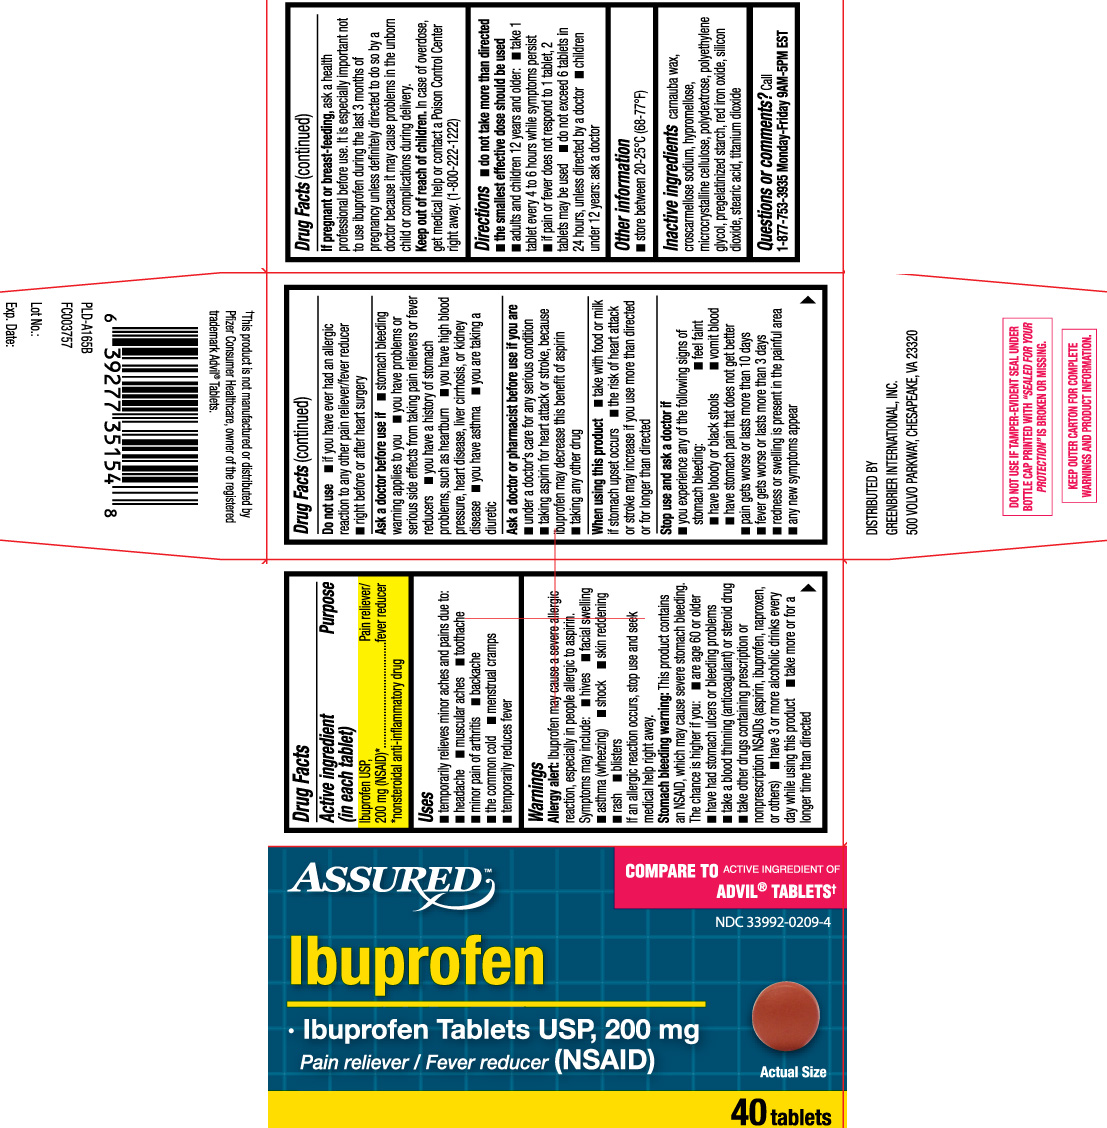 Ibuprofen USP 200 mg (NSAID)* *nonsteroidal anti-inflammatory drug